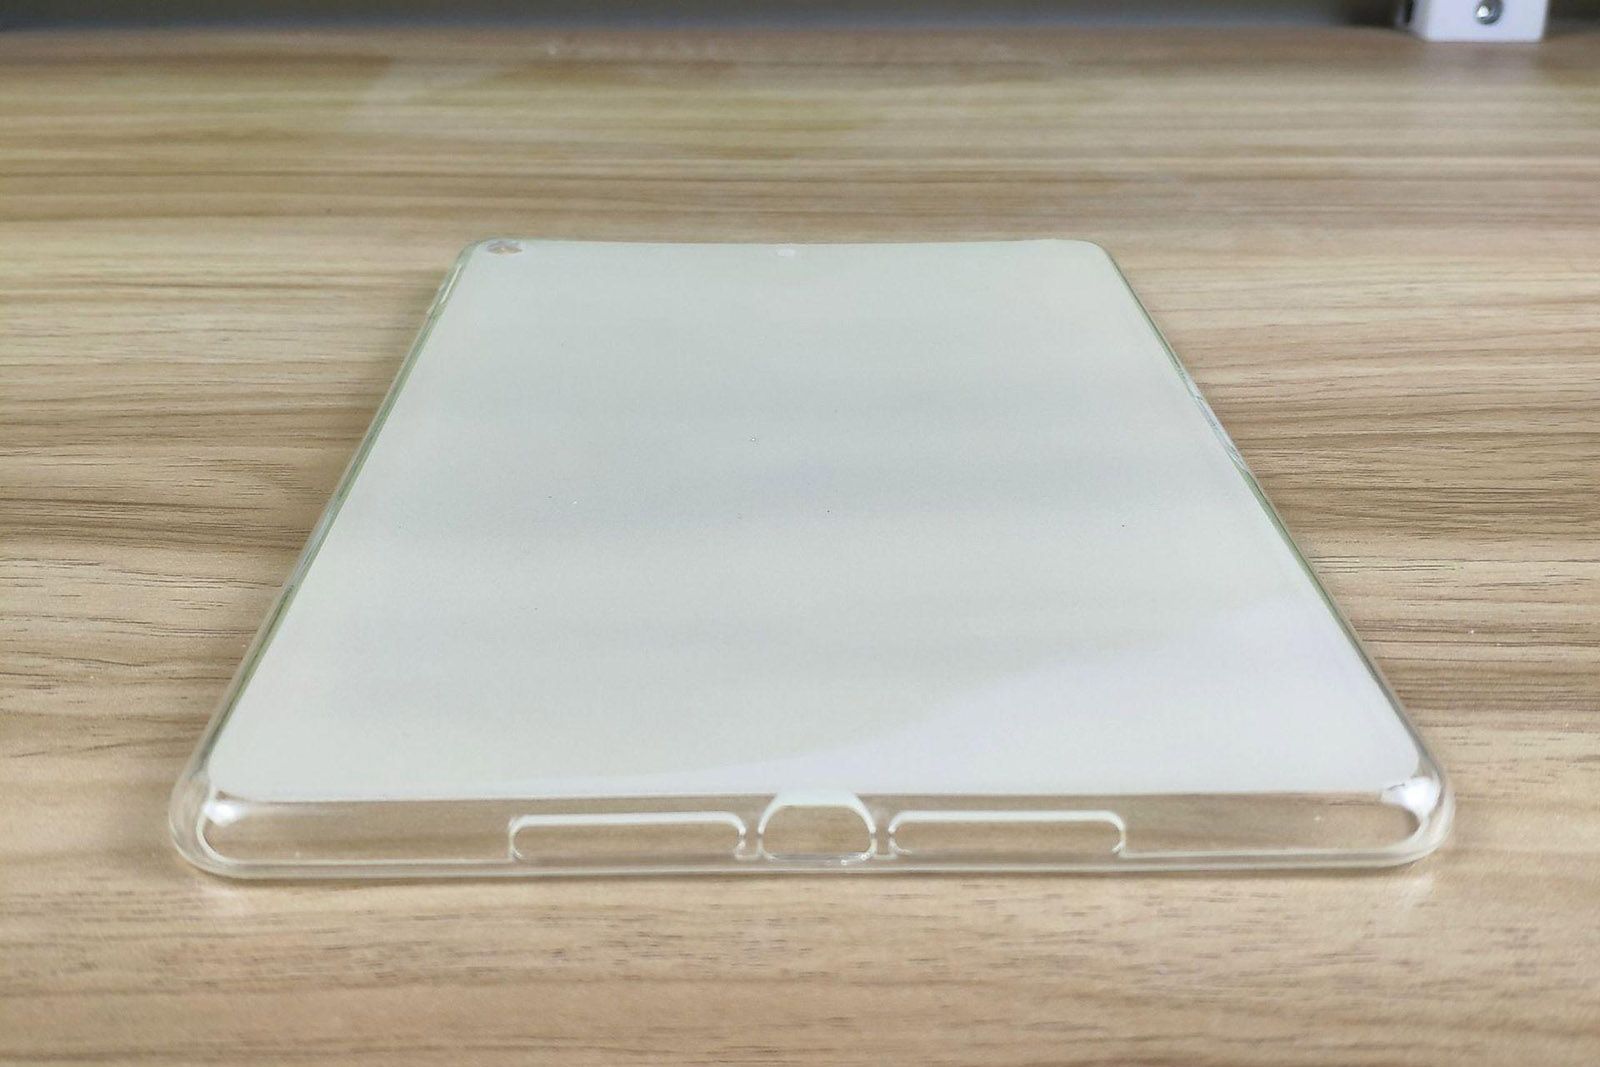 iPad mini 5 case and screen protector further fuel suspicions image 1